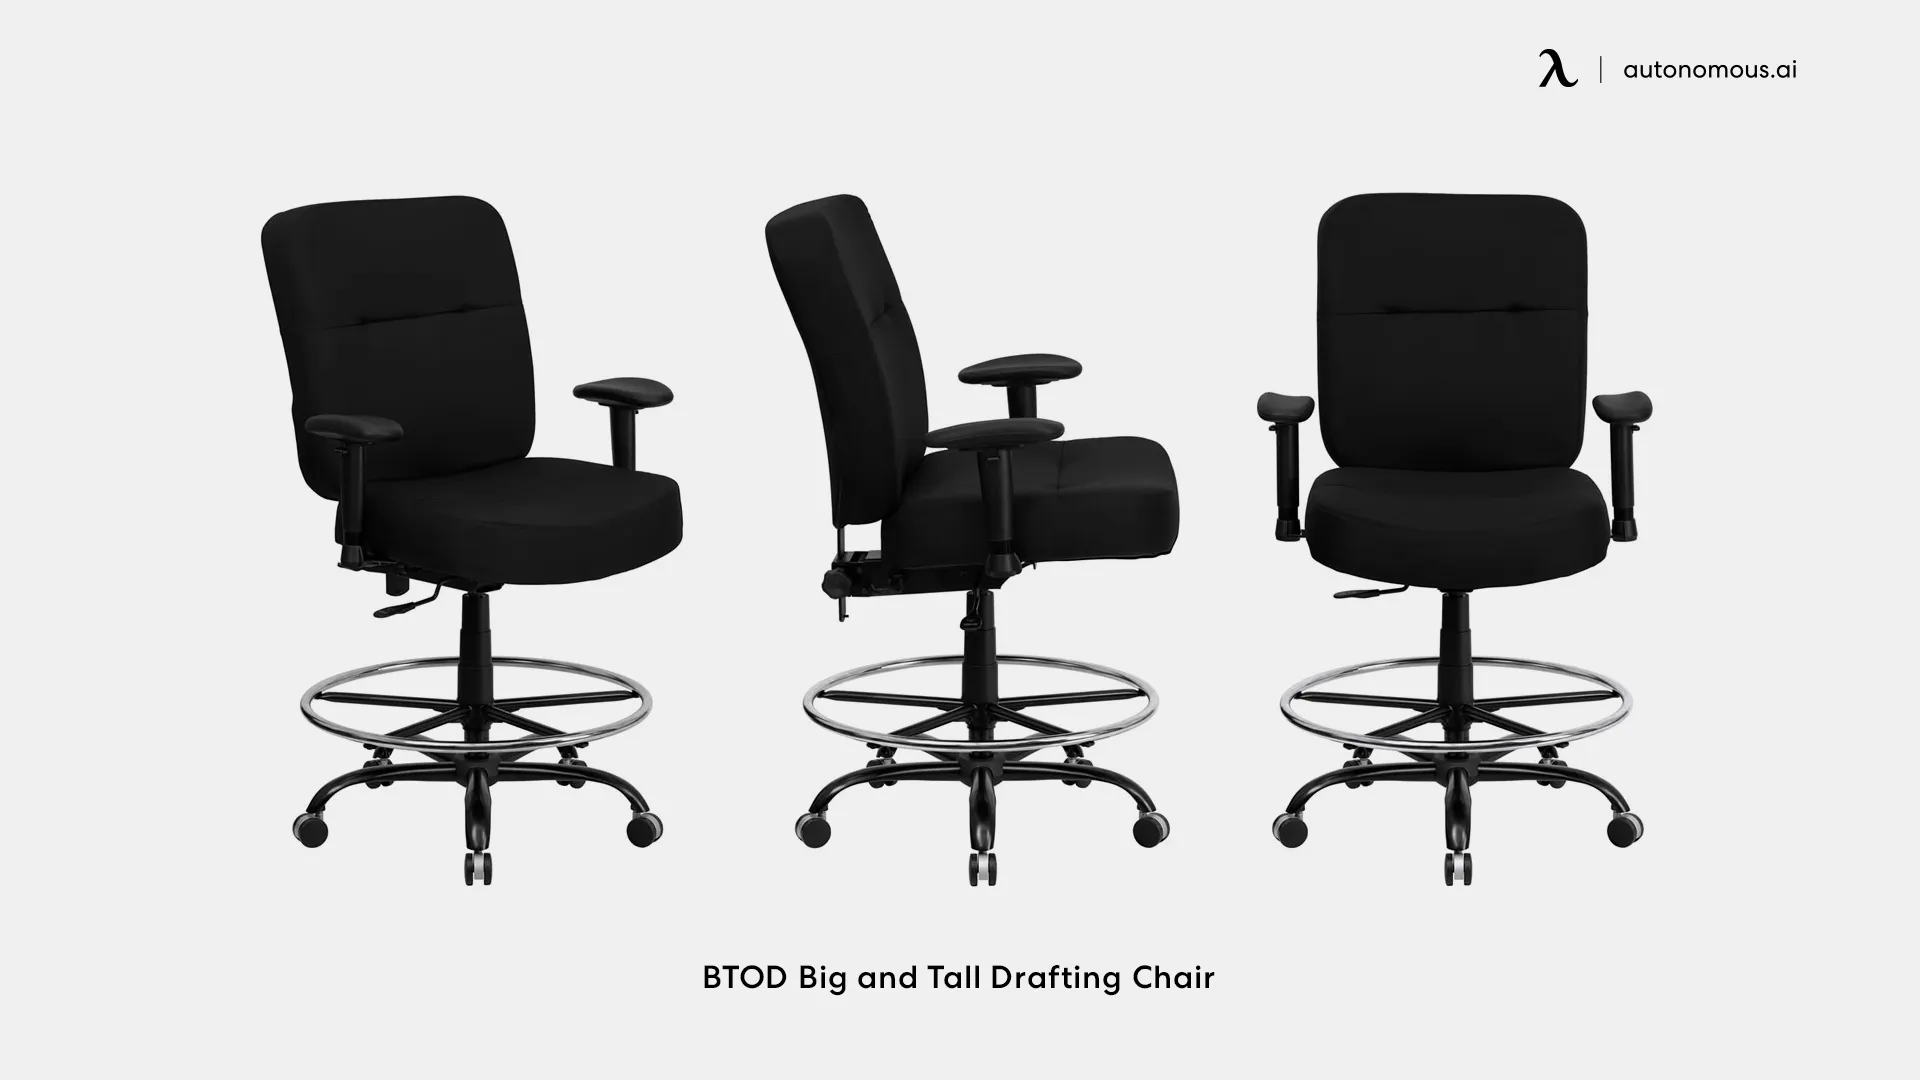 BTOD Big and Tall Drafting Chair